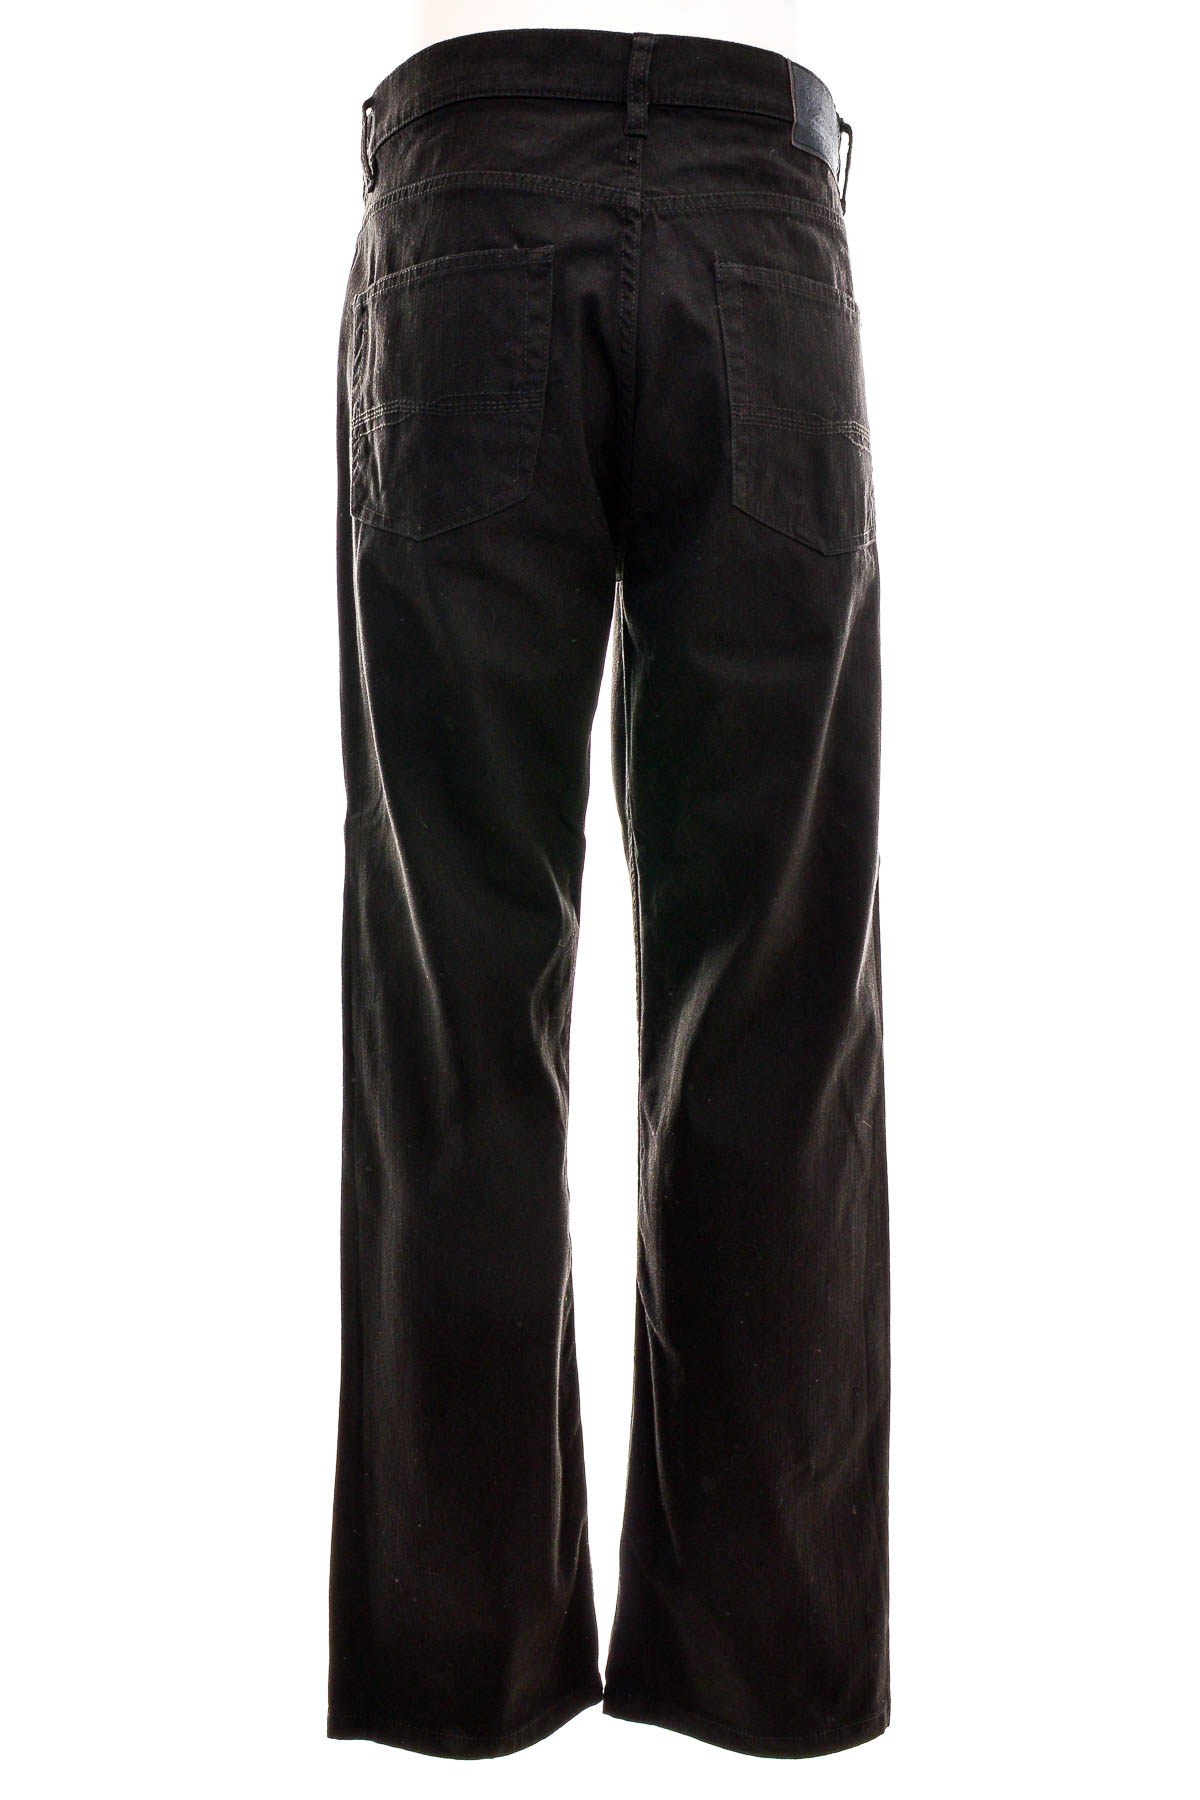 Pantalon pentru bărbați - Pioneer - 1